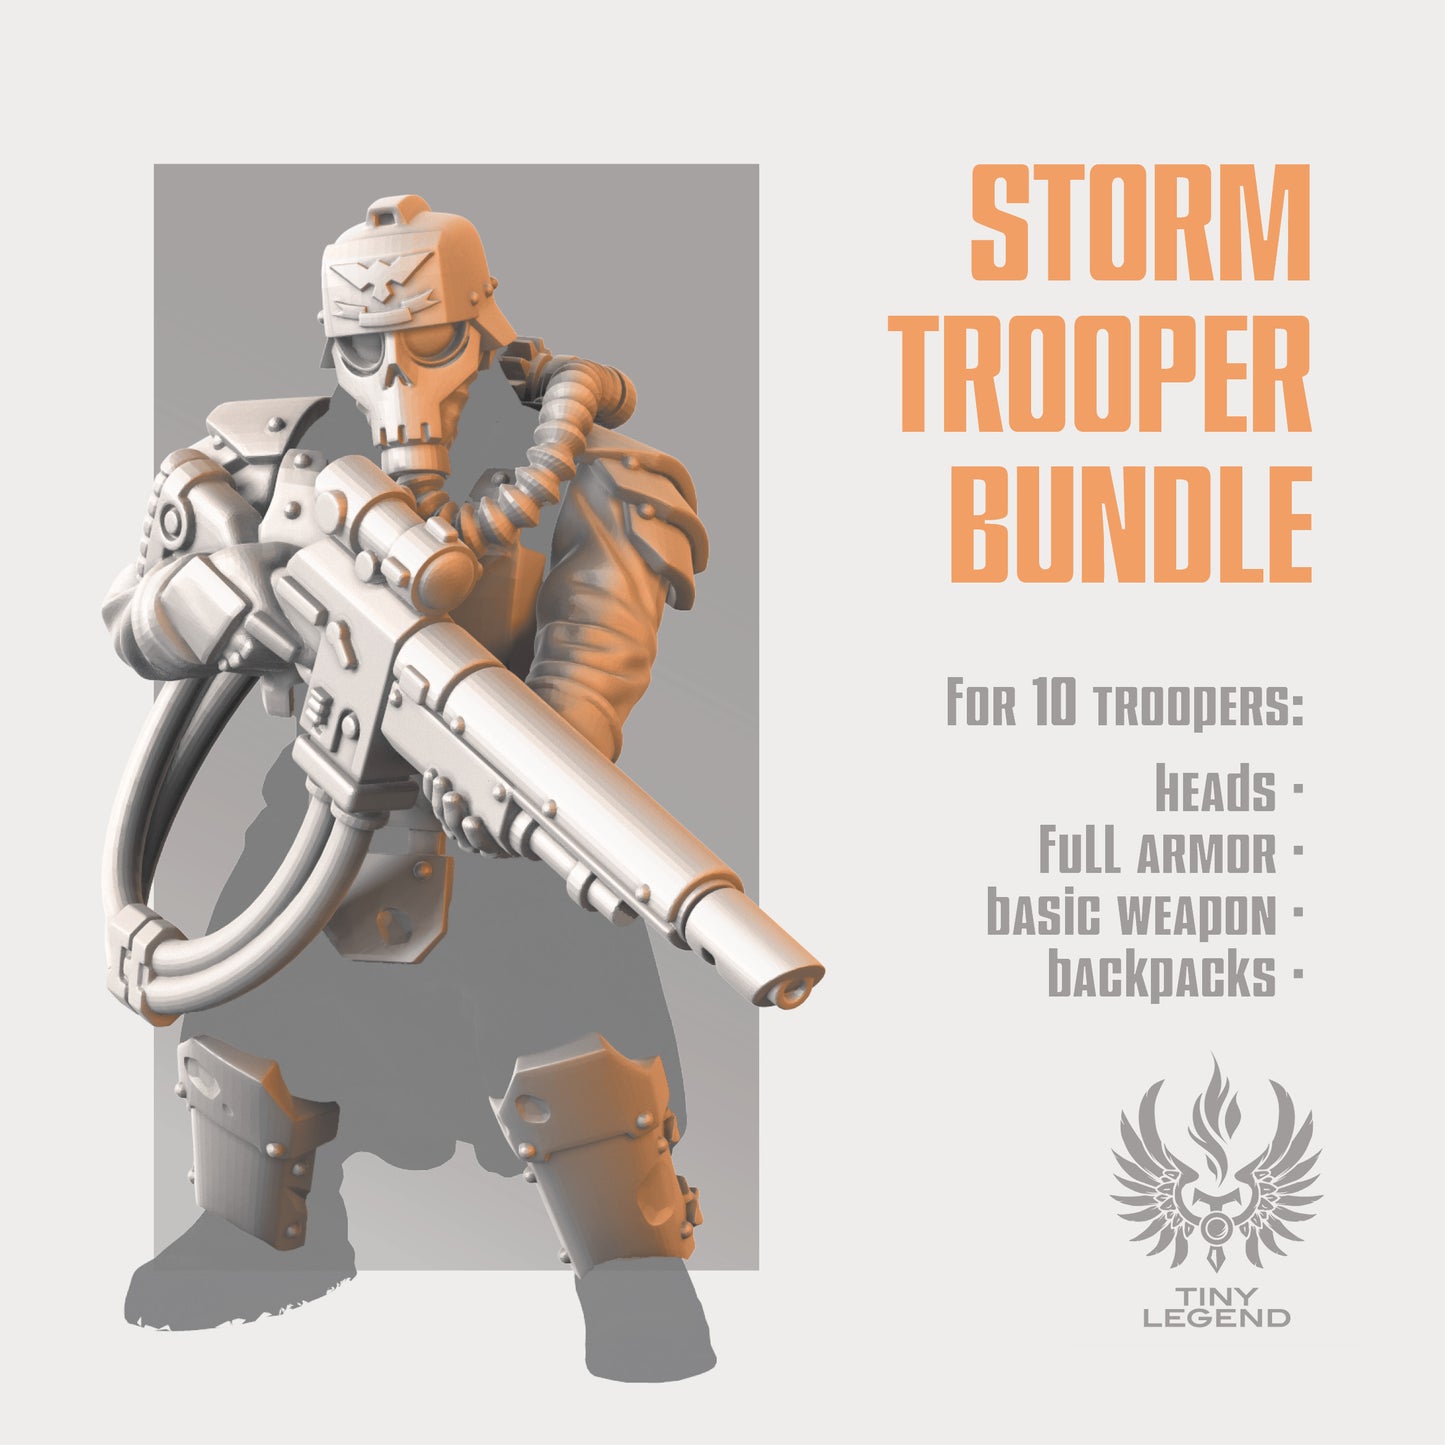 Storm trooper bundle